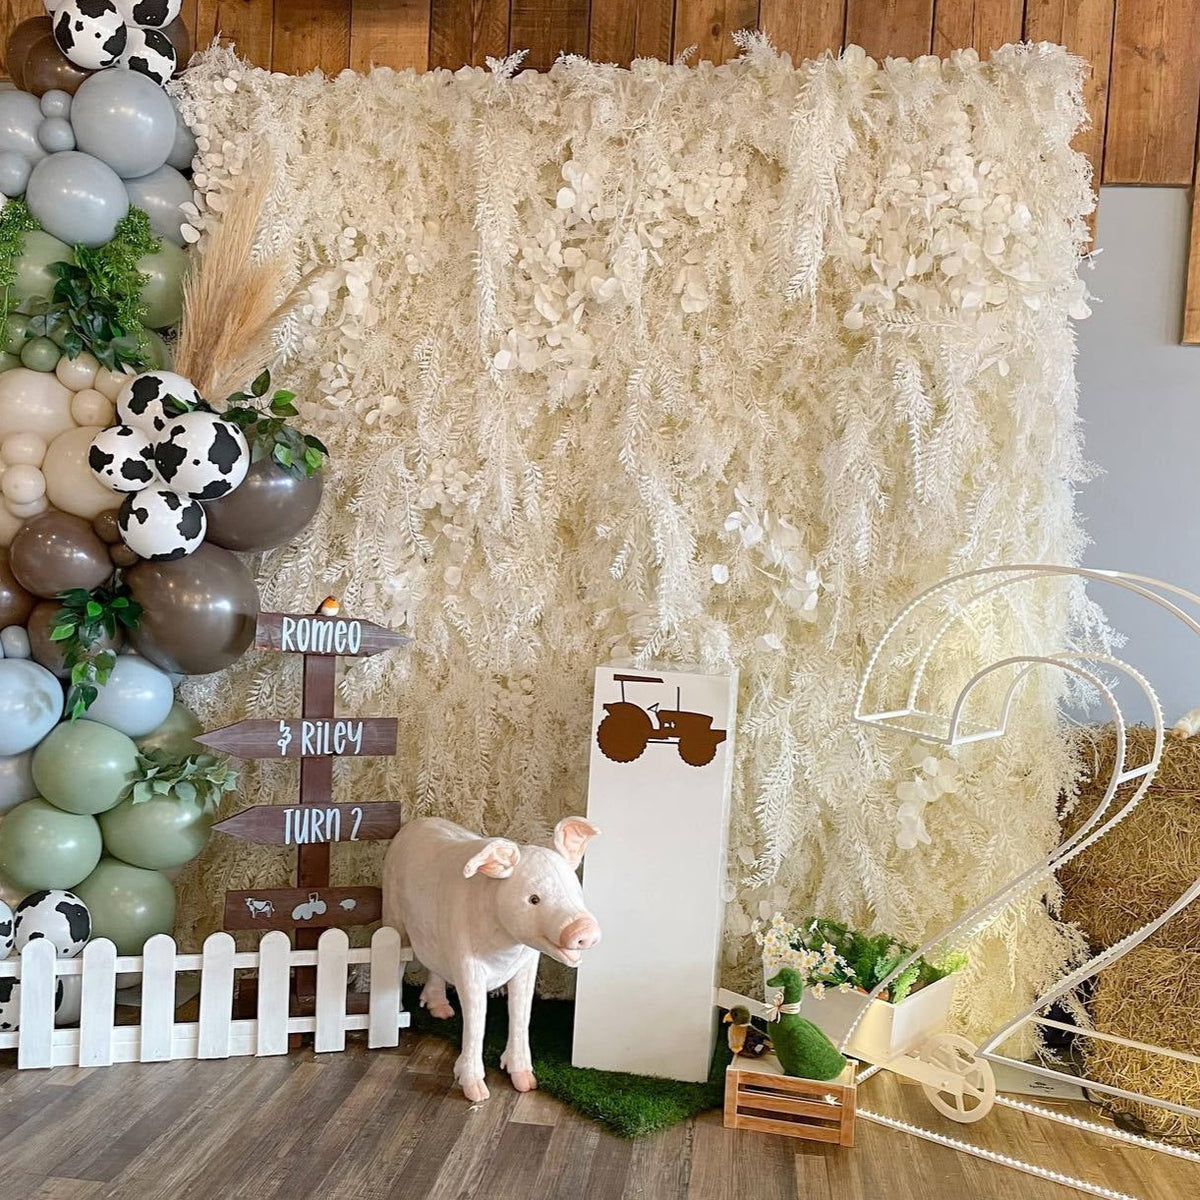 3D Artificial Flower Wall Arrangement Wedding Party Birthday Backdrop Decor HQ3752